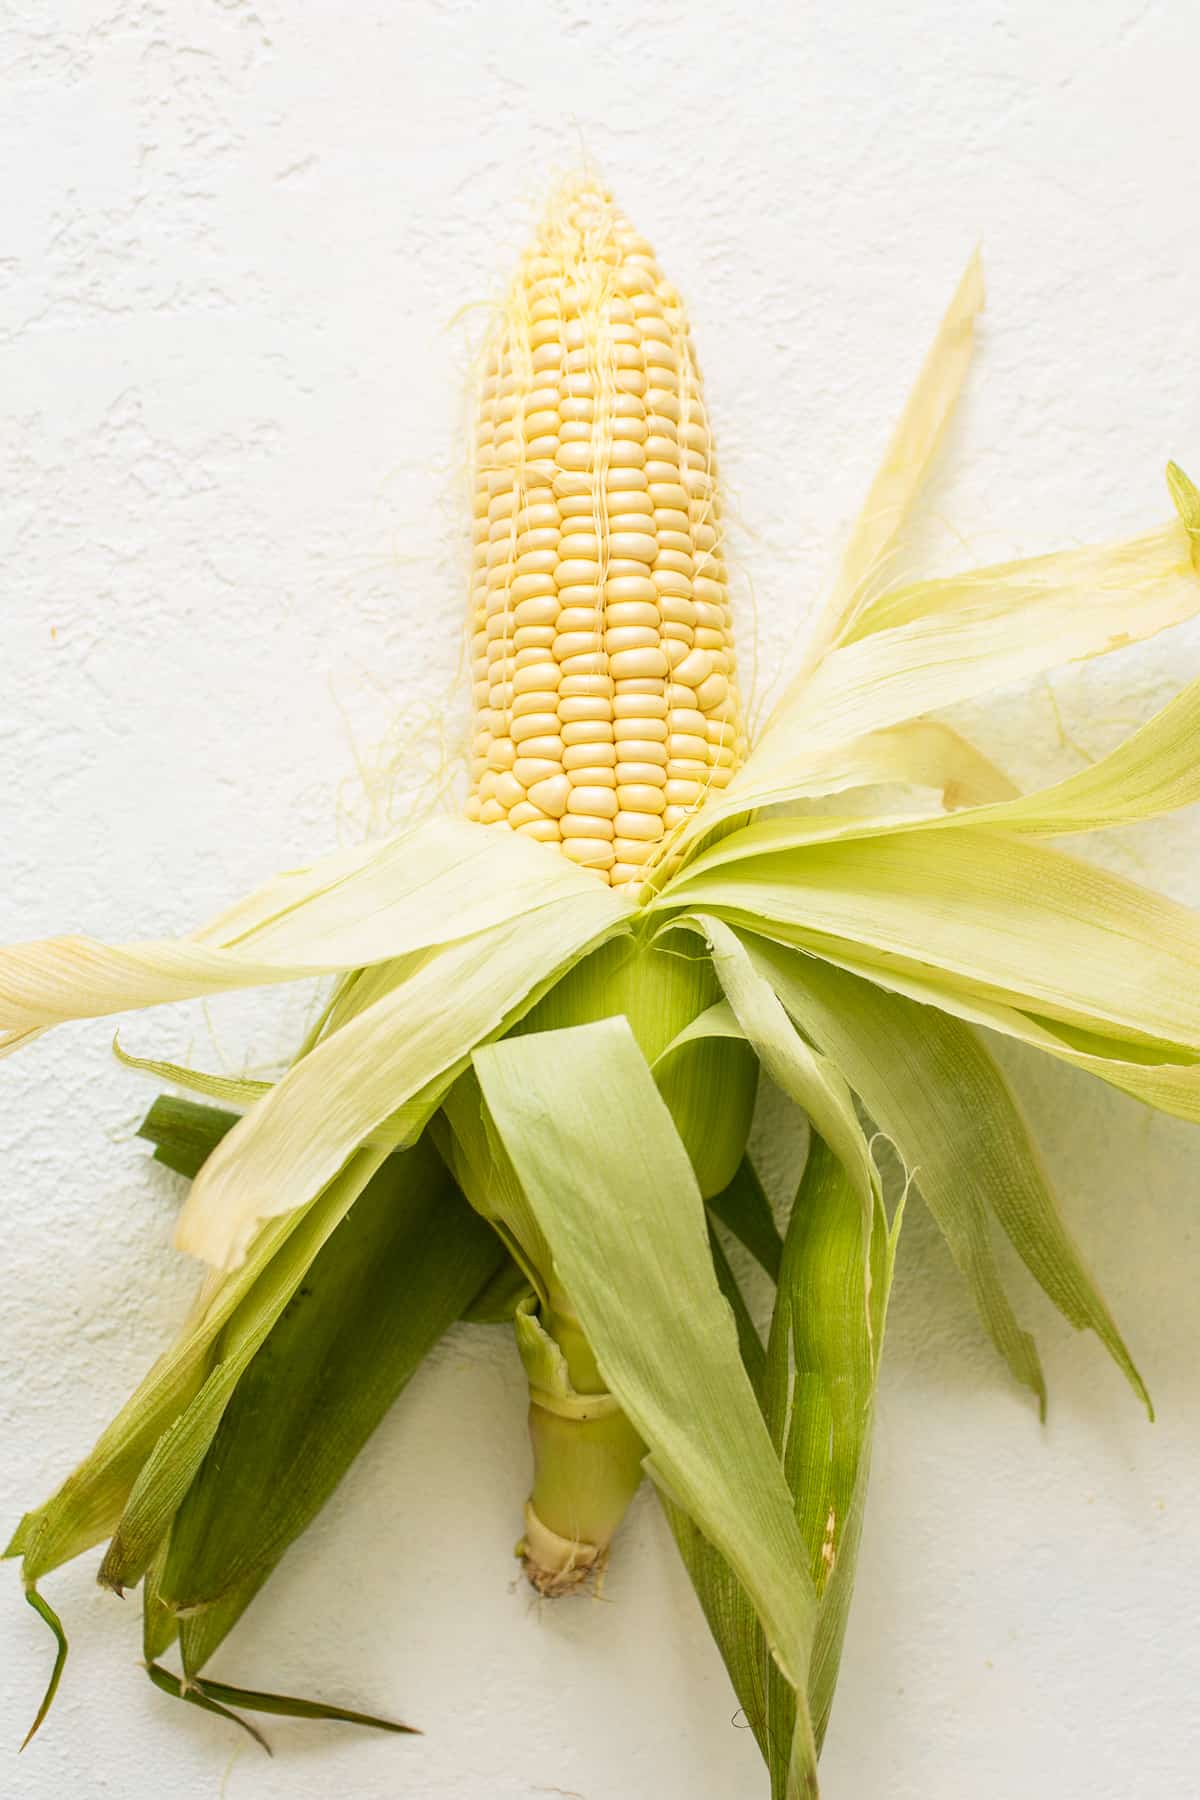 shucking corn on the cob.